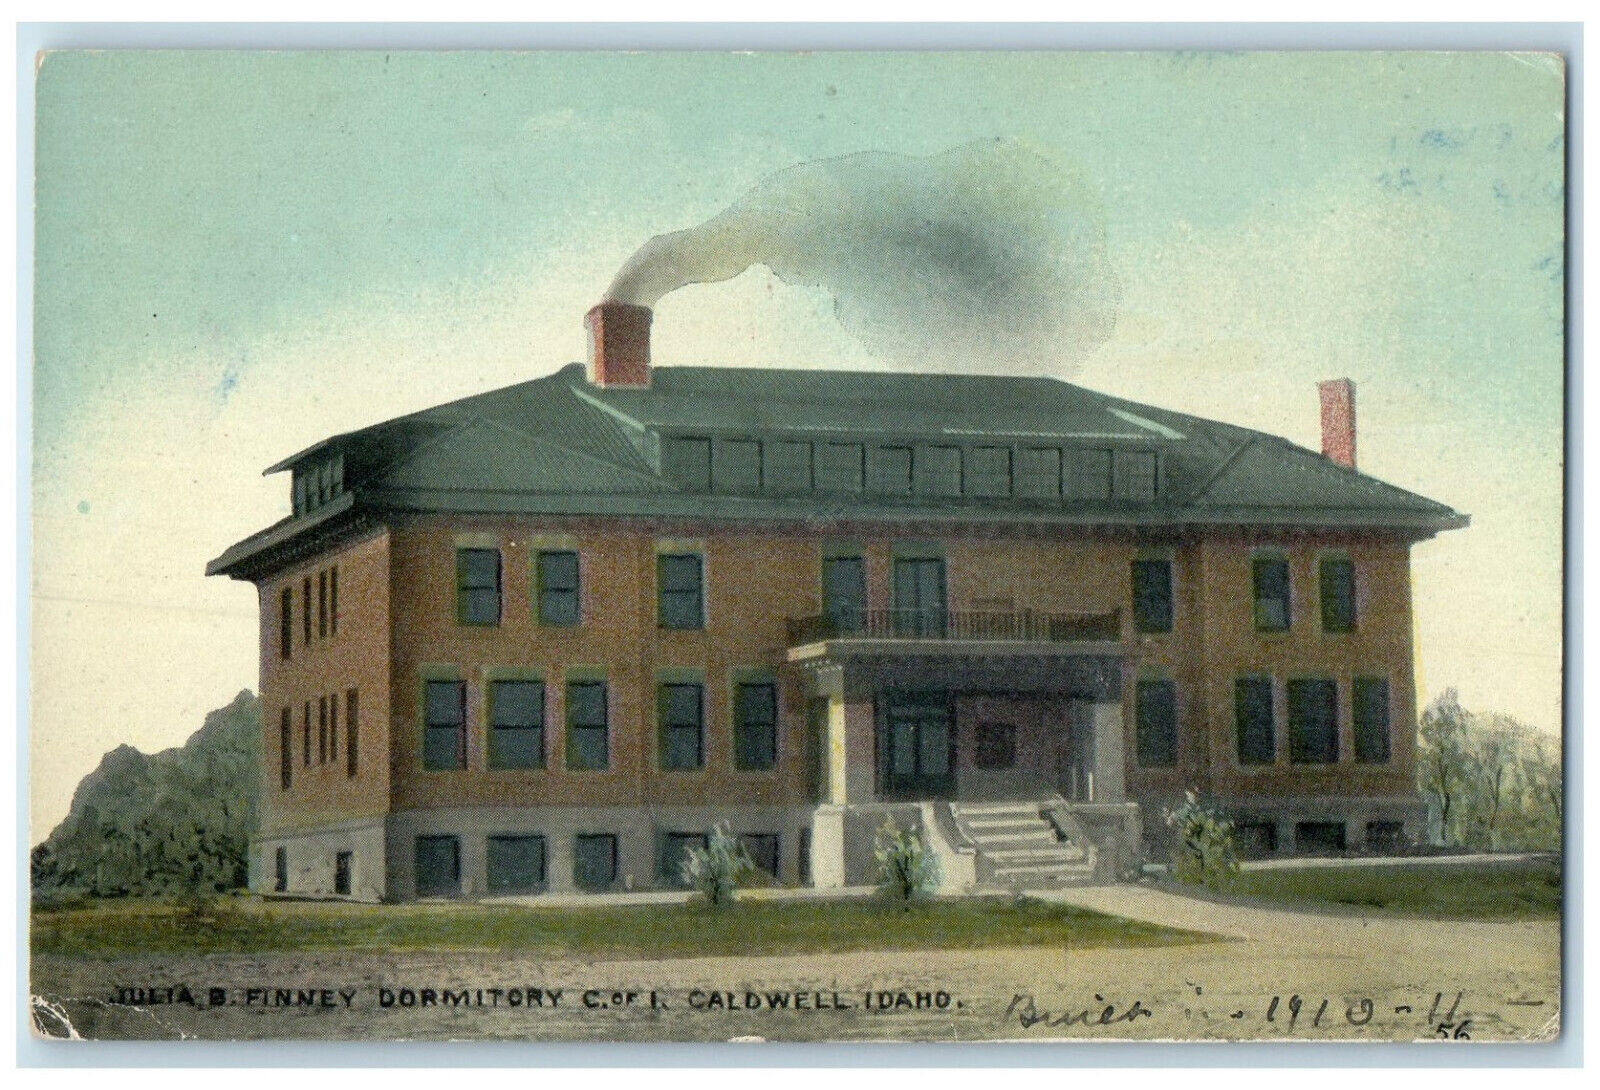 1911 Julia B Finney Dormitory C of I Caldwell Idaho ID Antique Postcard